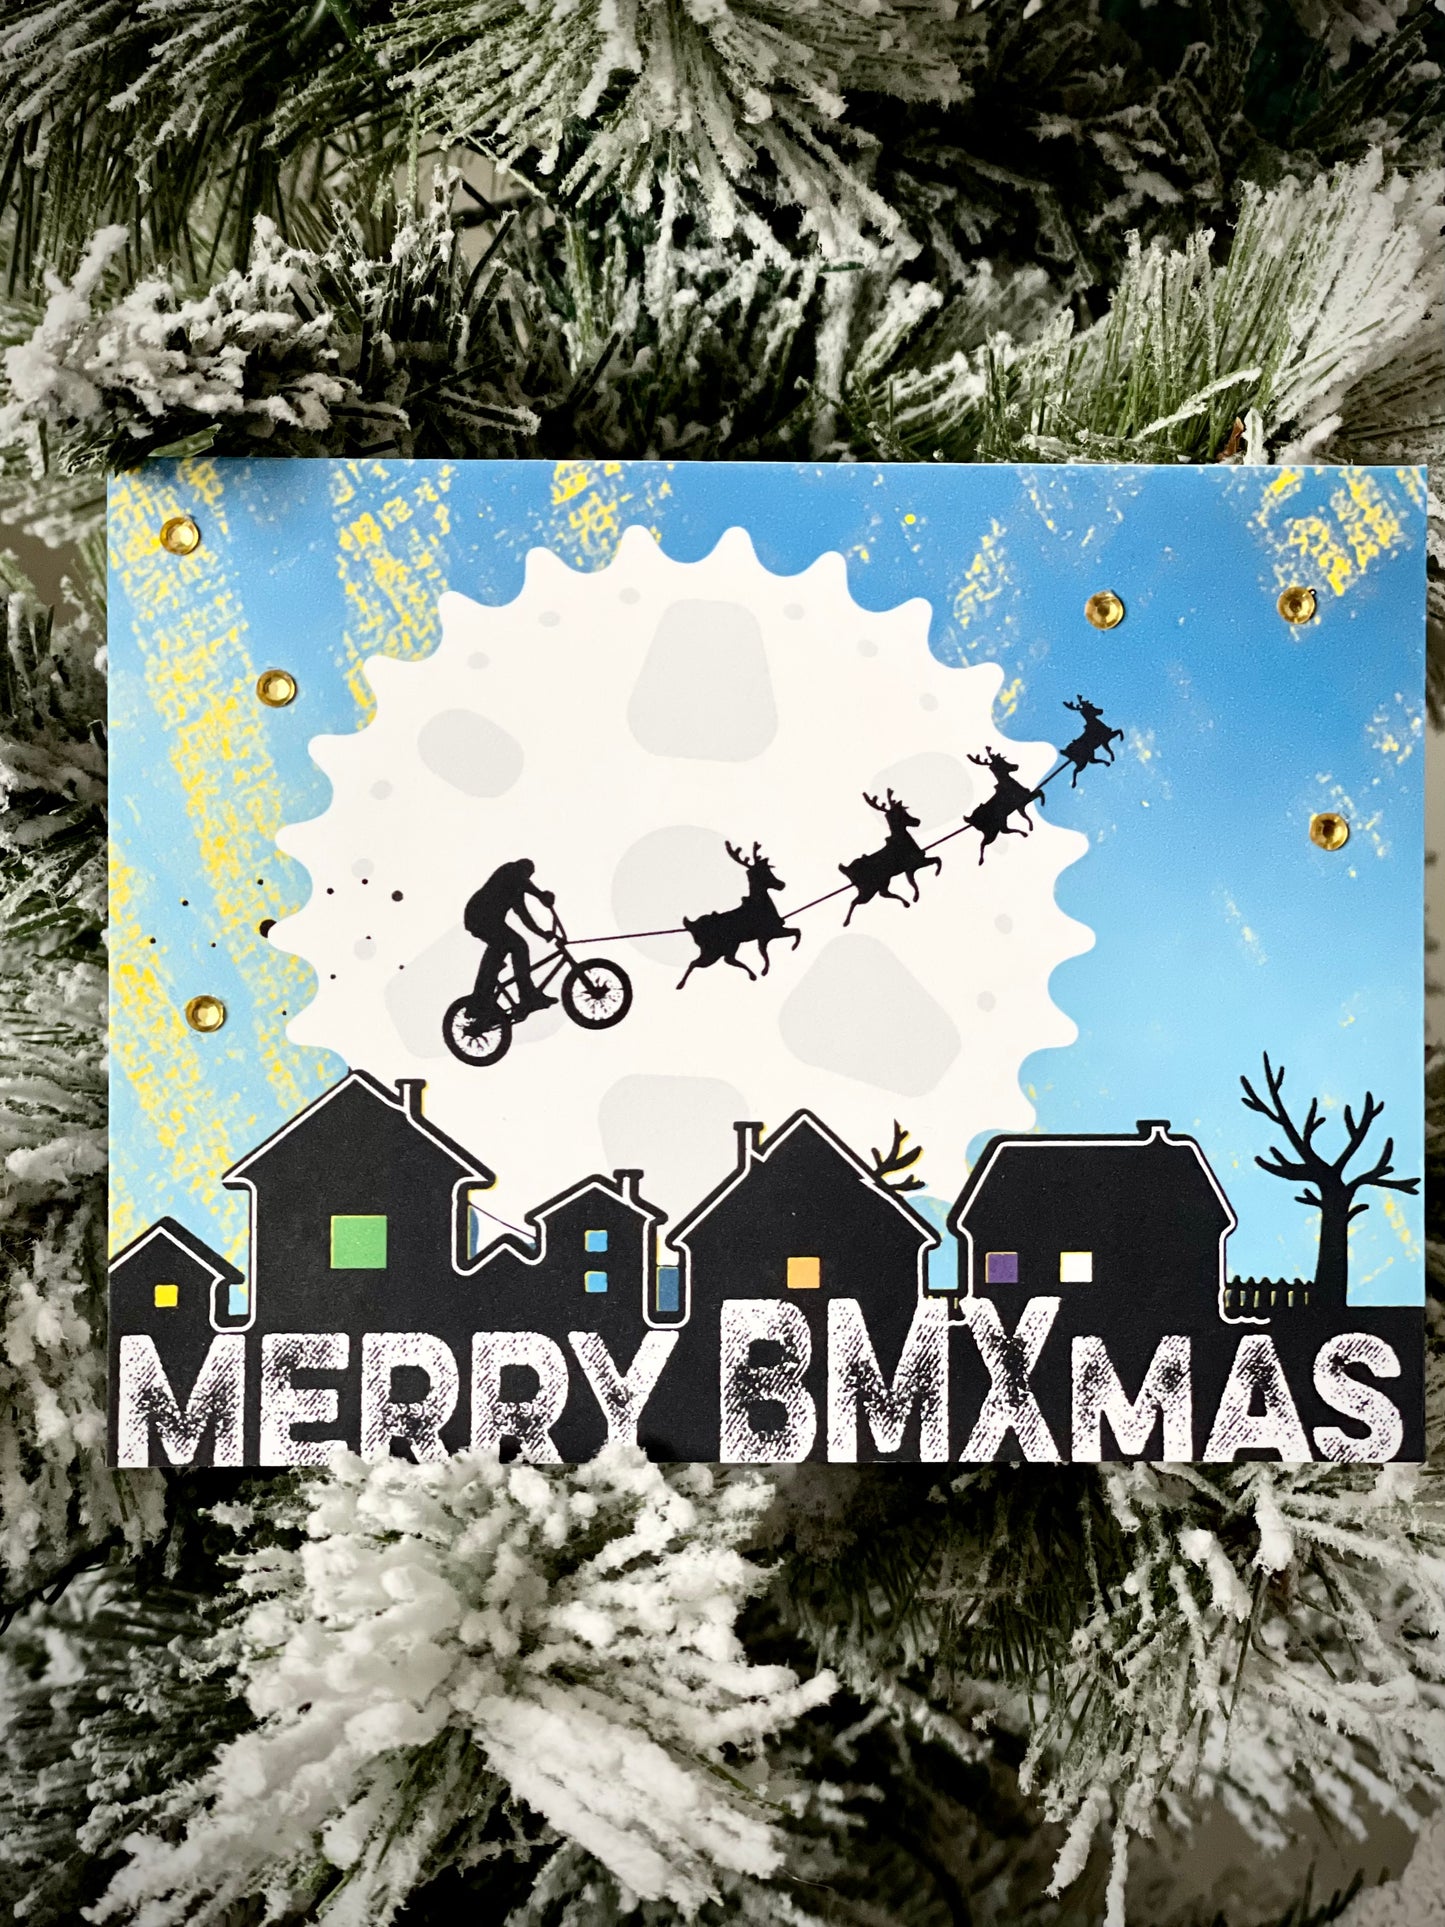 BMX Christmas Card - GREETING CARD